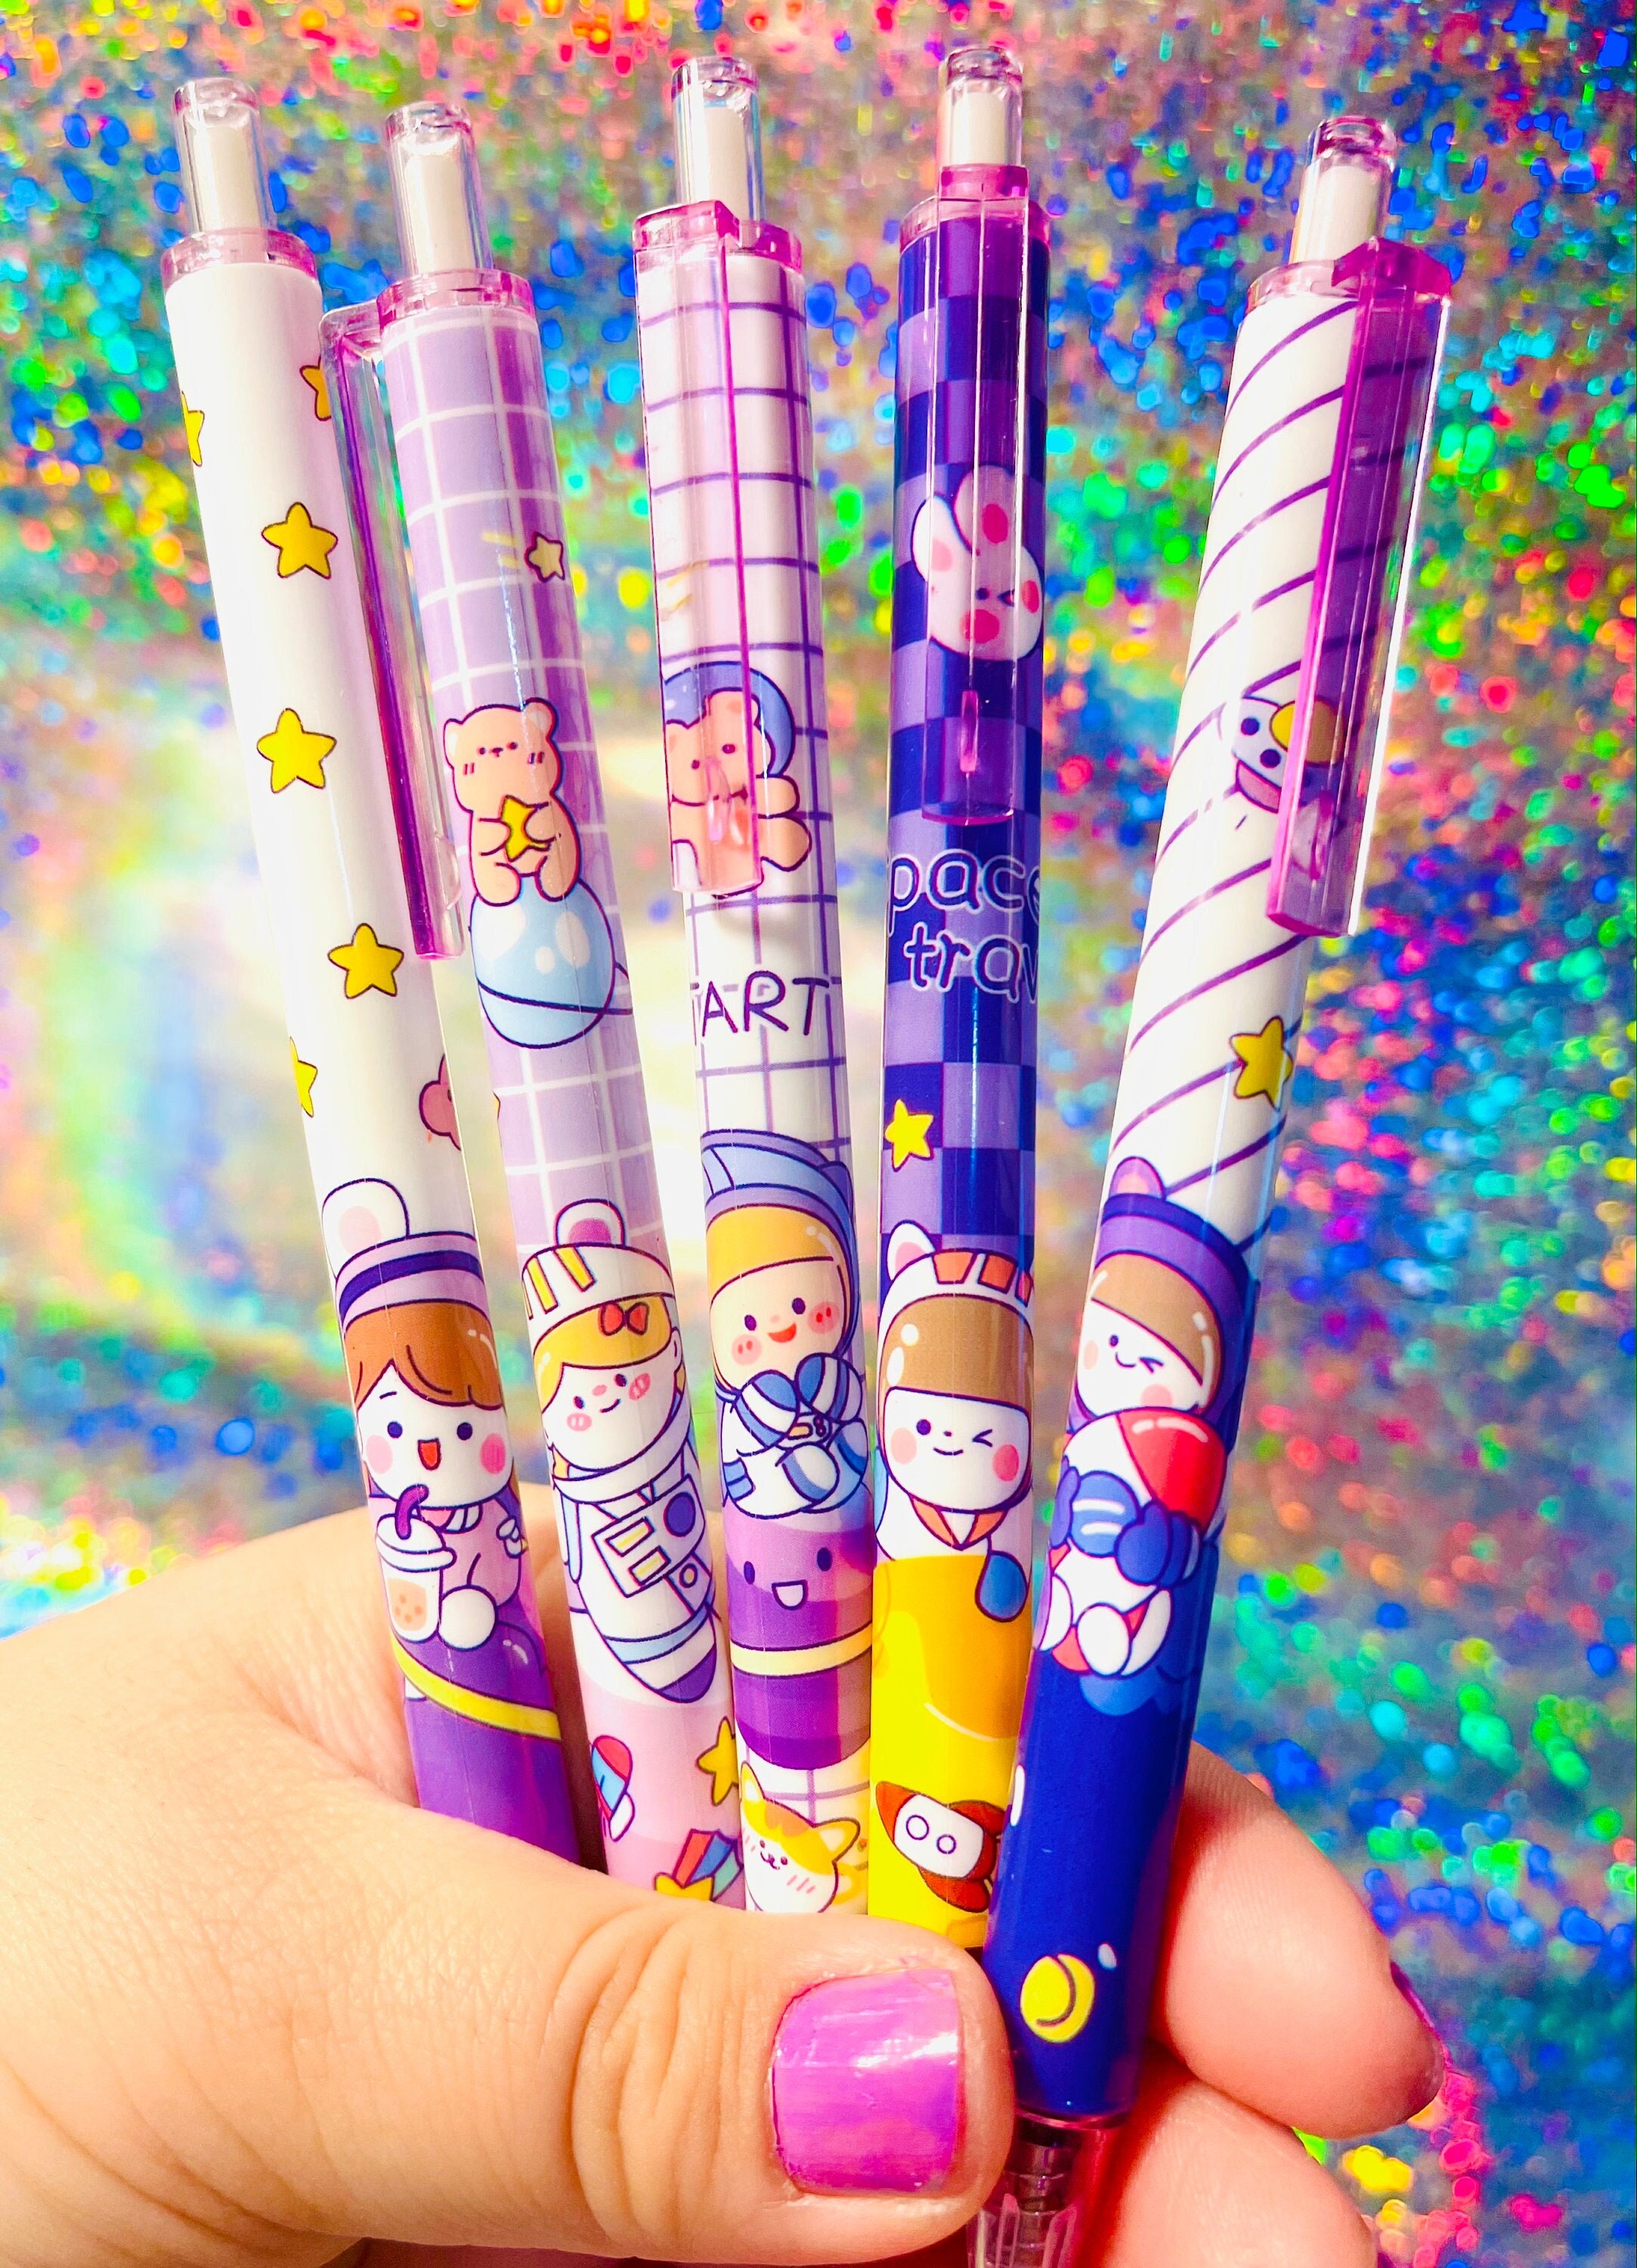 TULX pen erasable pen kawaii stationery kids school supplies kawaii school  supplies kawaii stationery